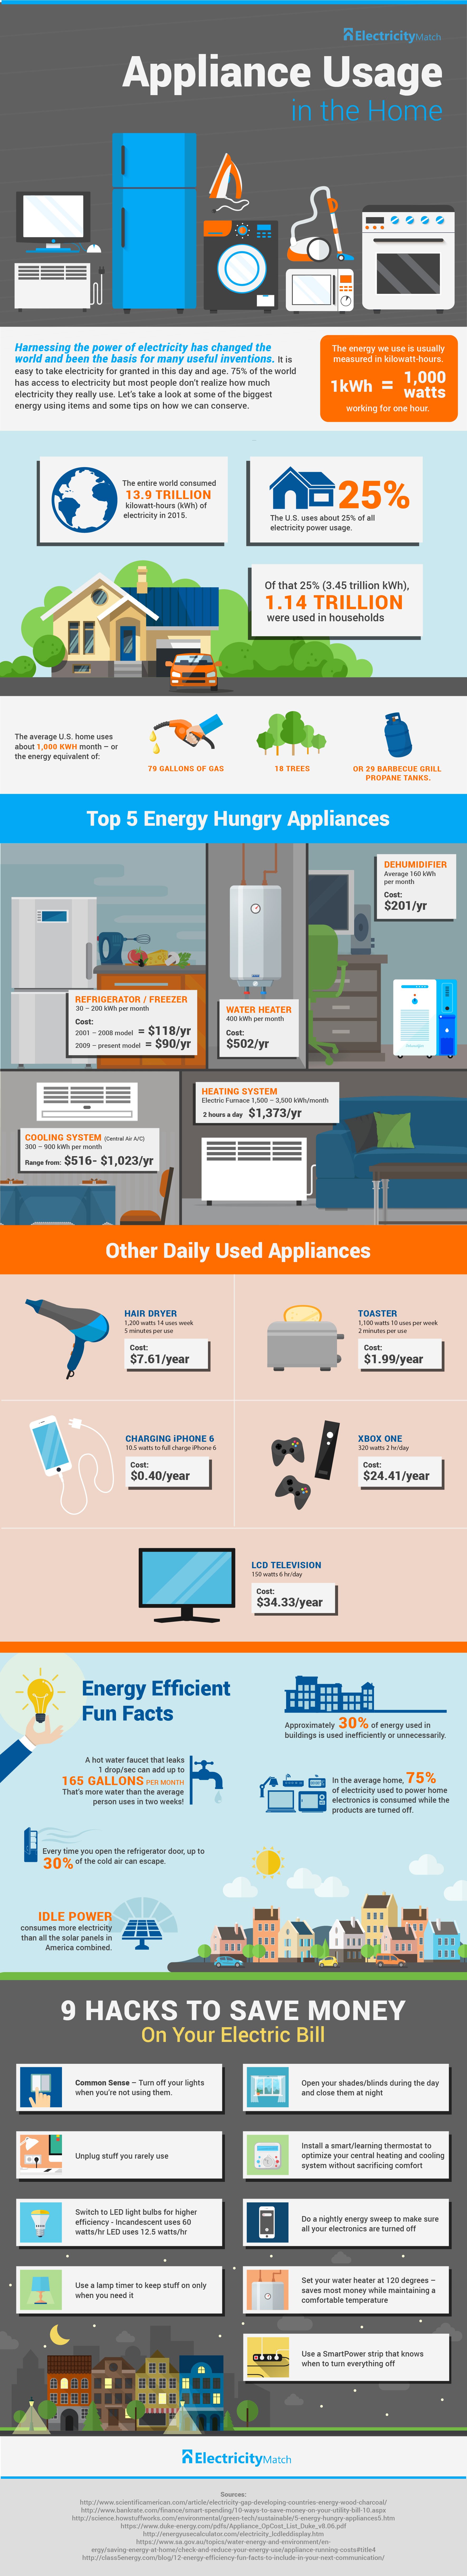 v2-electricitymatch-appliances-infographic-01 (2)